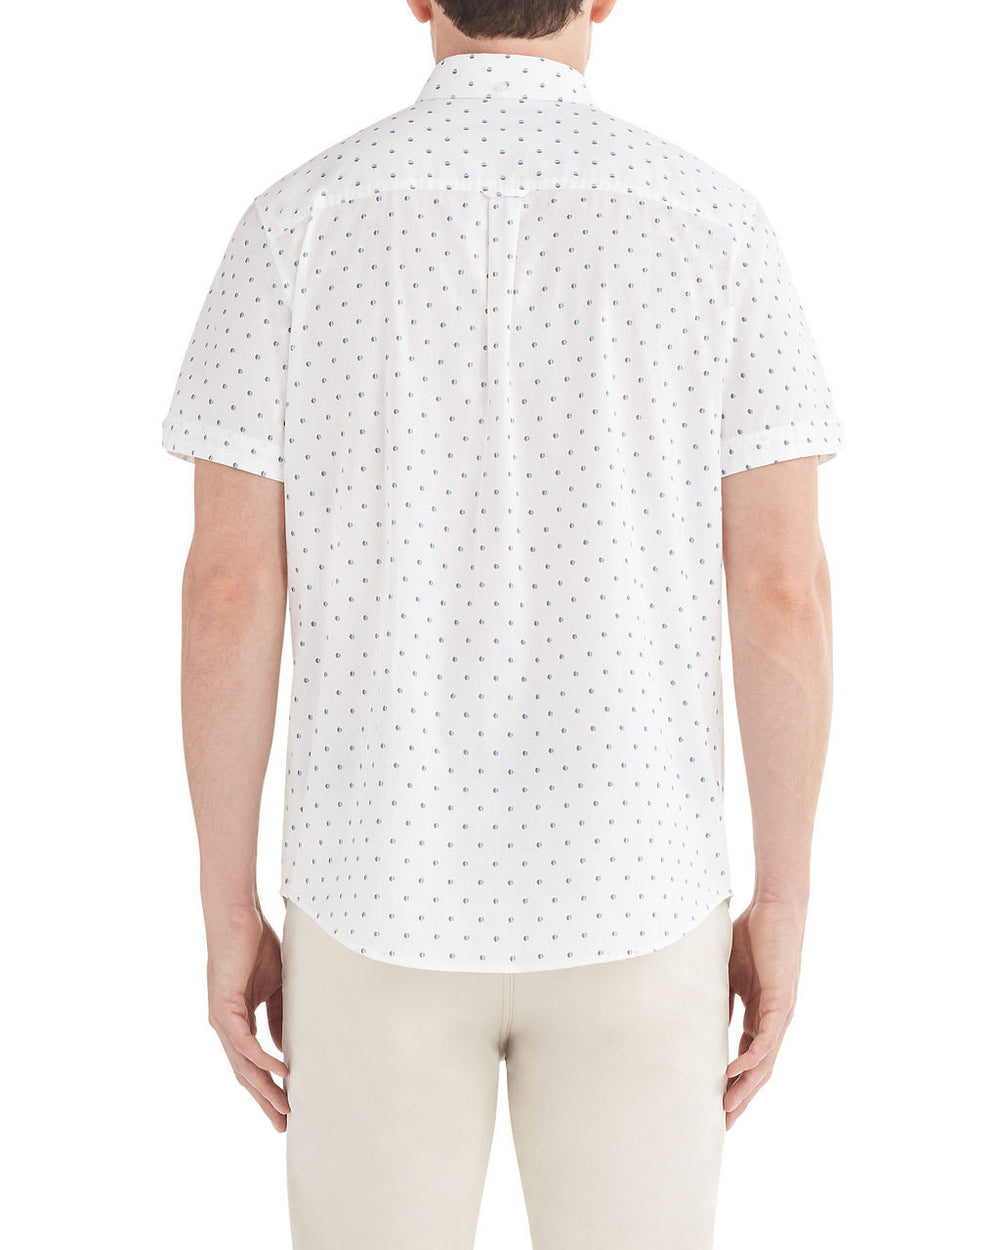 Short-Sleeve Stripe Print Shirt - White